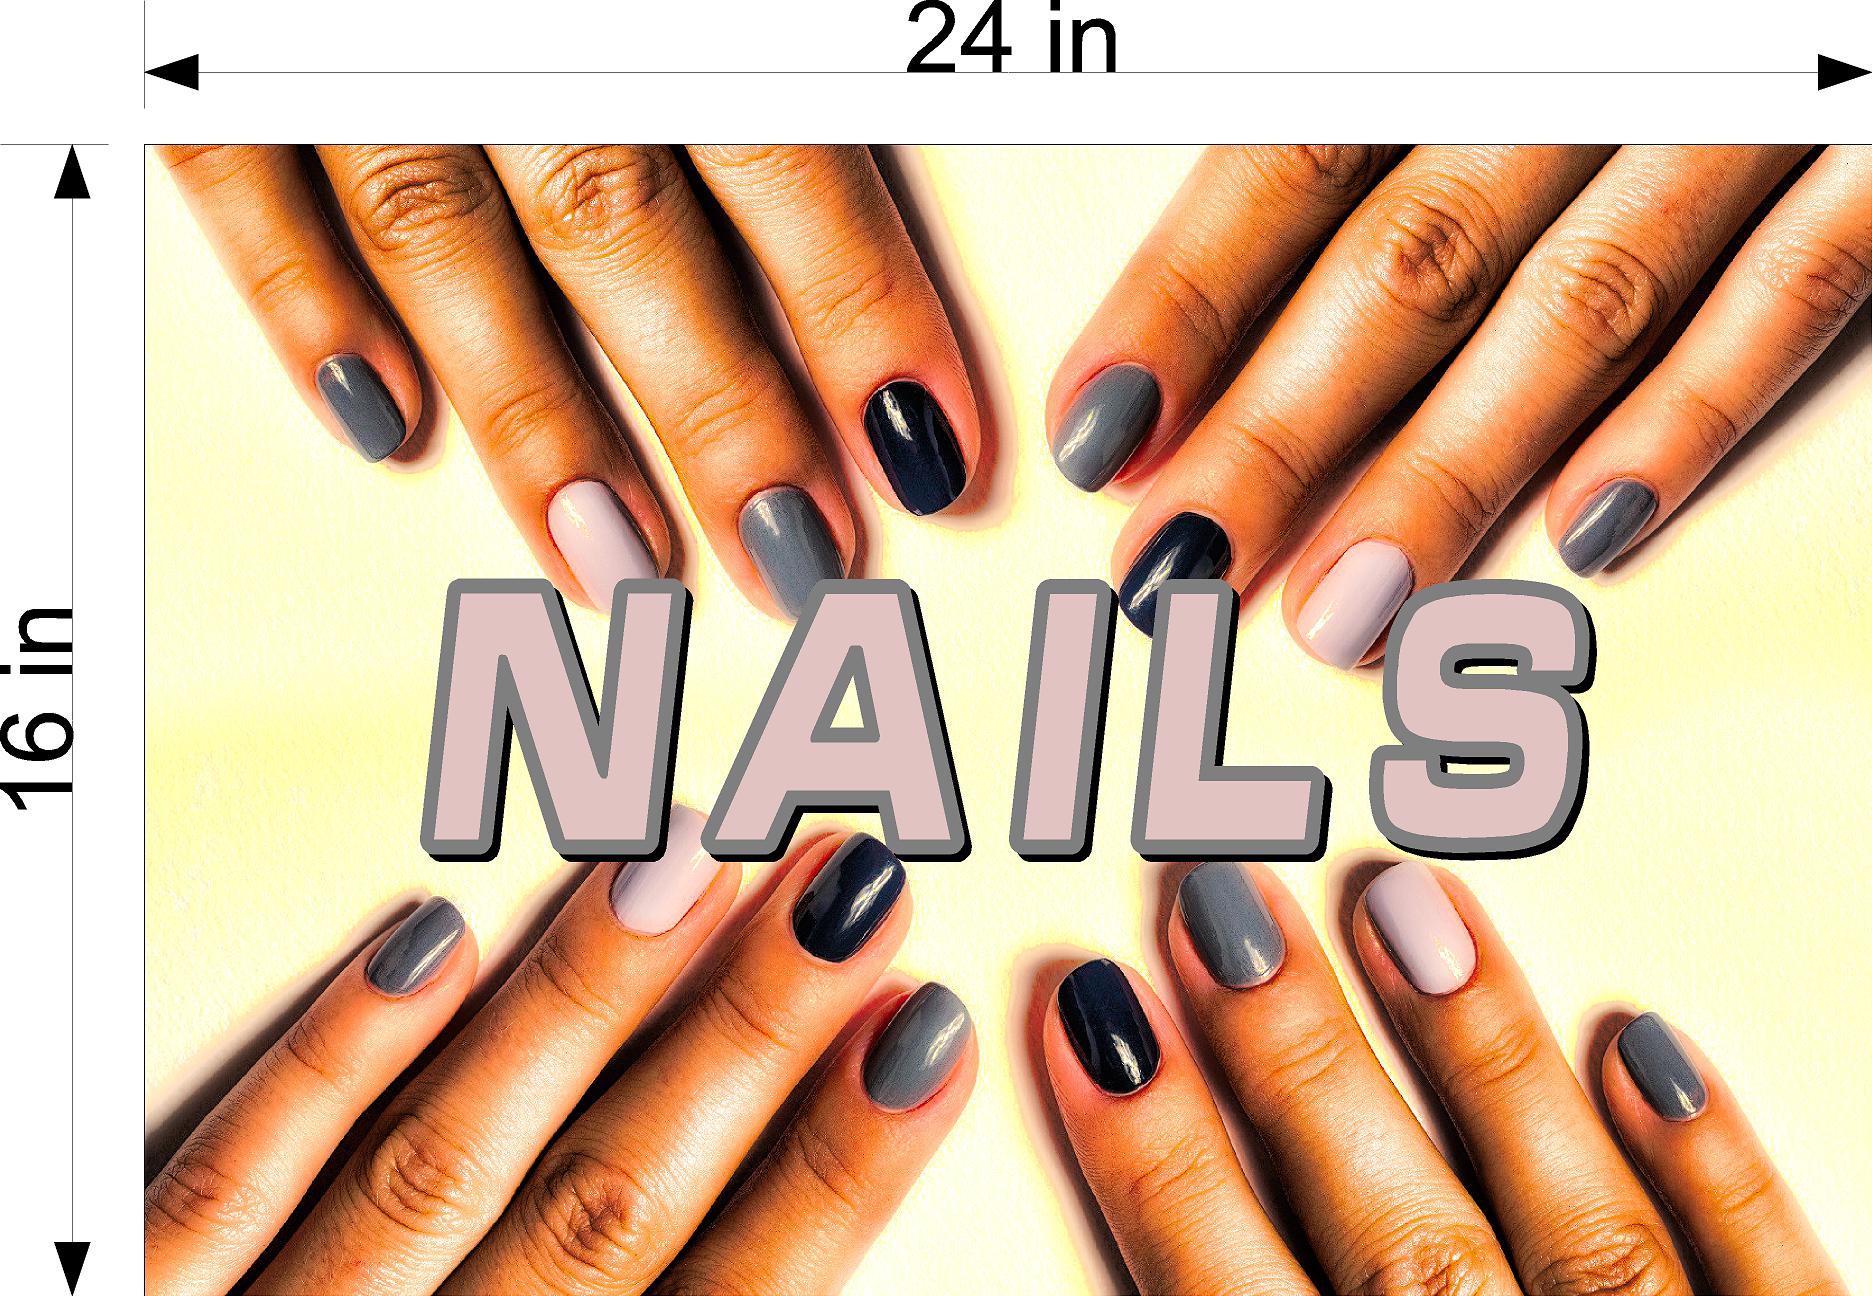 Nails 12 Photo-Realistic Paper Poster Premium Interior Inside Sign Advertising Marketing Wall Window Non-Laminated Horizontal